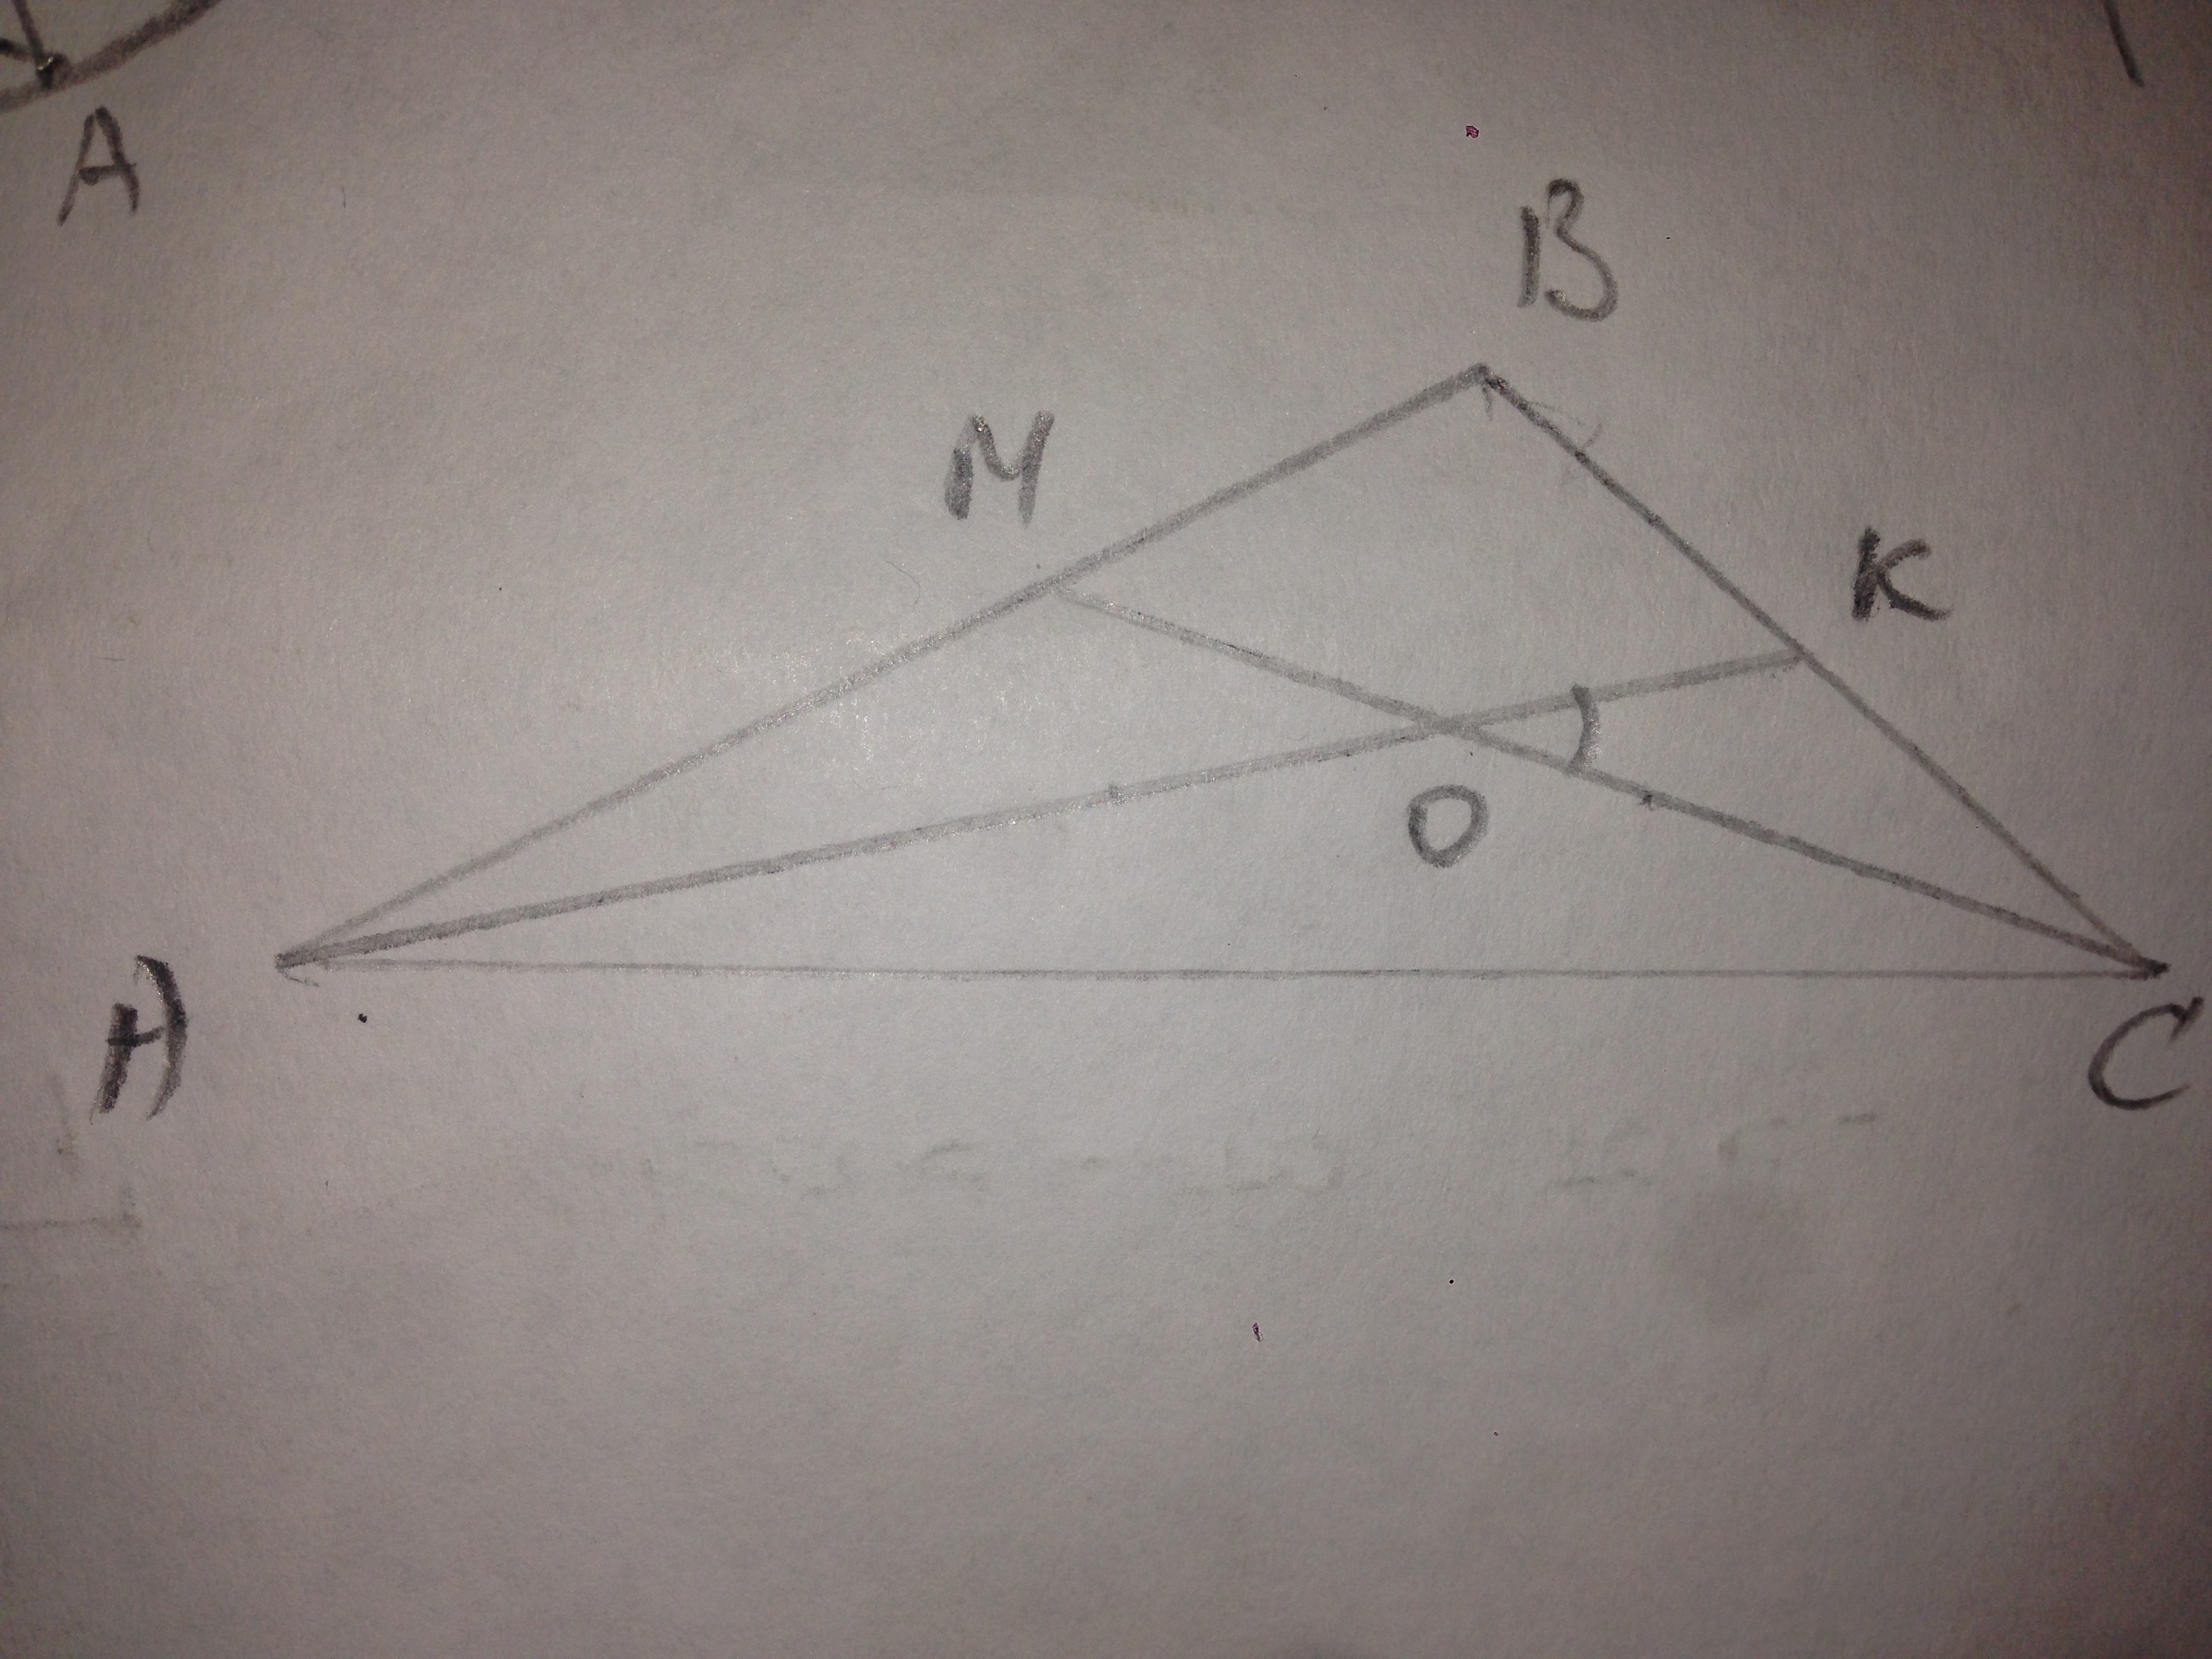 Биссектриса 10 корень из 3. Две стороны треугольника равны 7 и 12. АК биссектриса найти угол АВС, АК биссектриса 110 градусов.